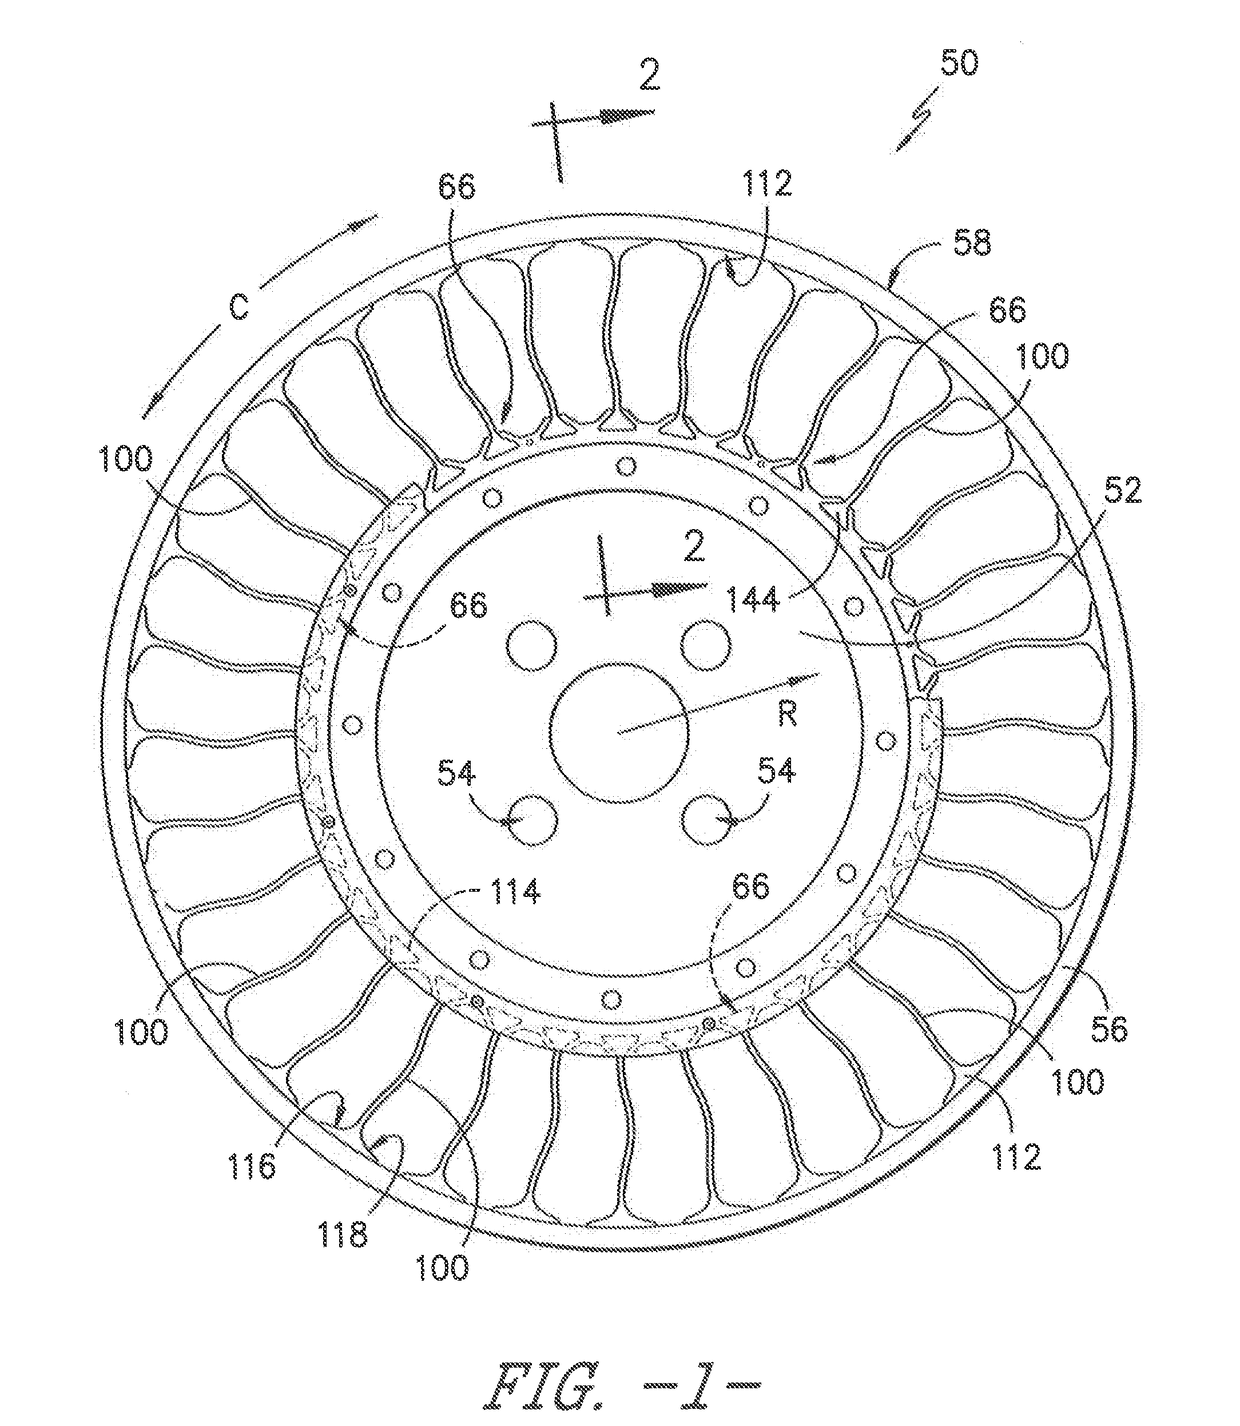 Spoke fabrication for a non-pneumatic wheel